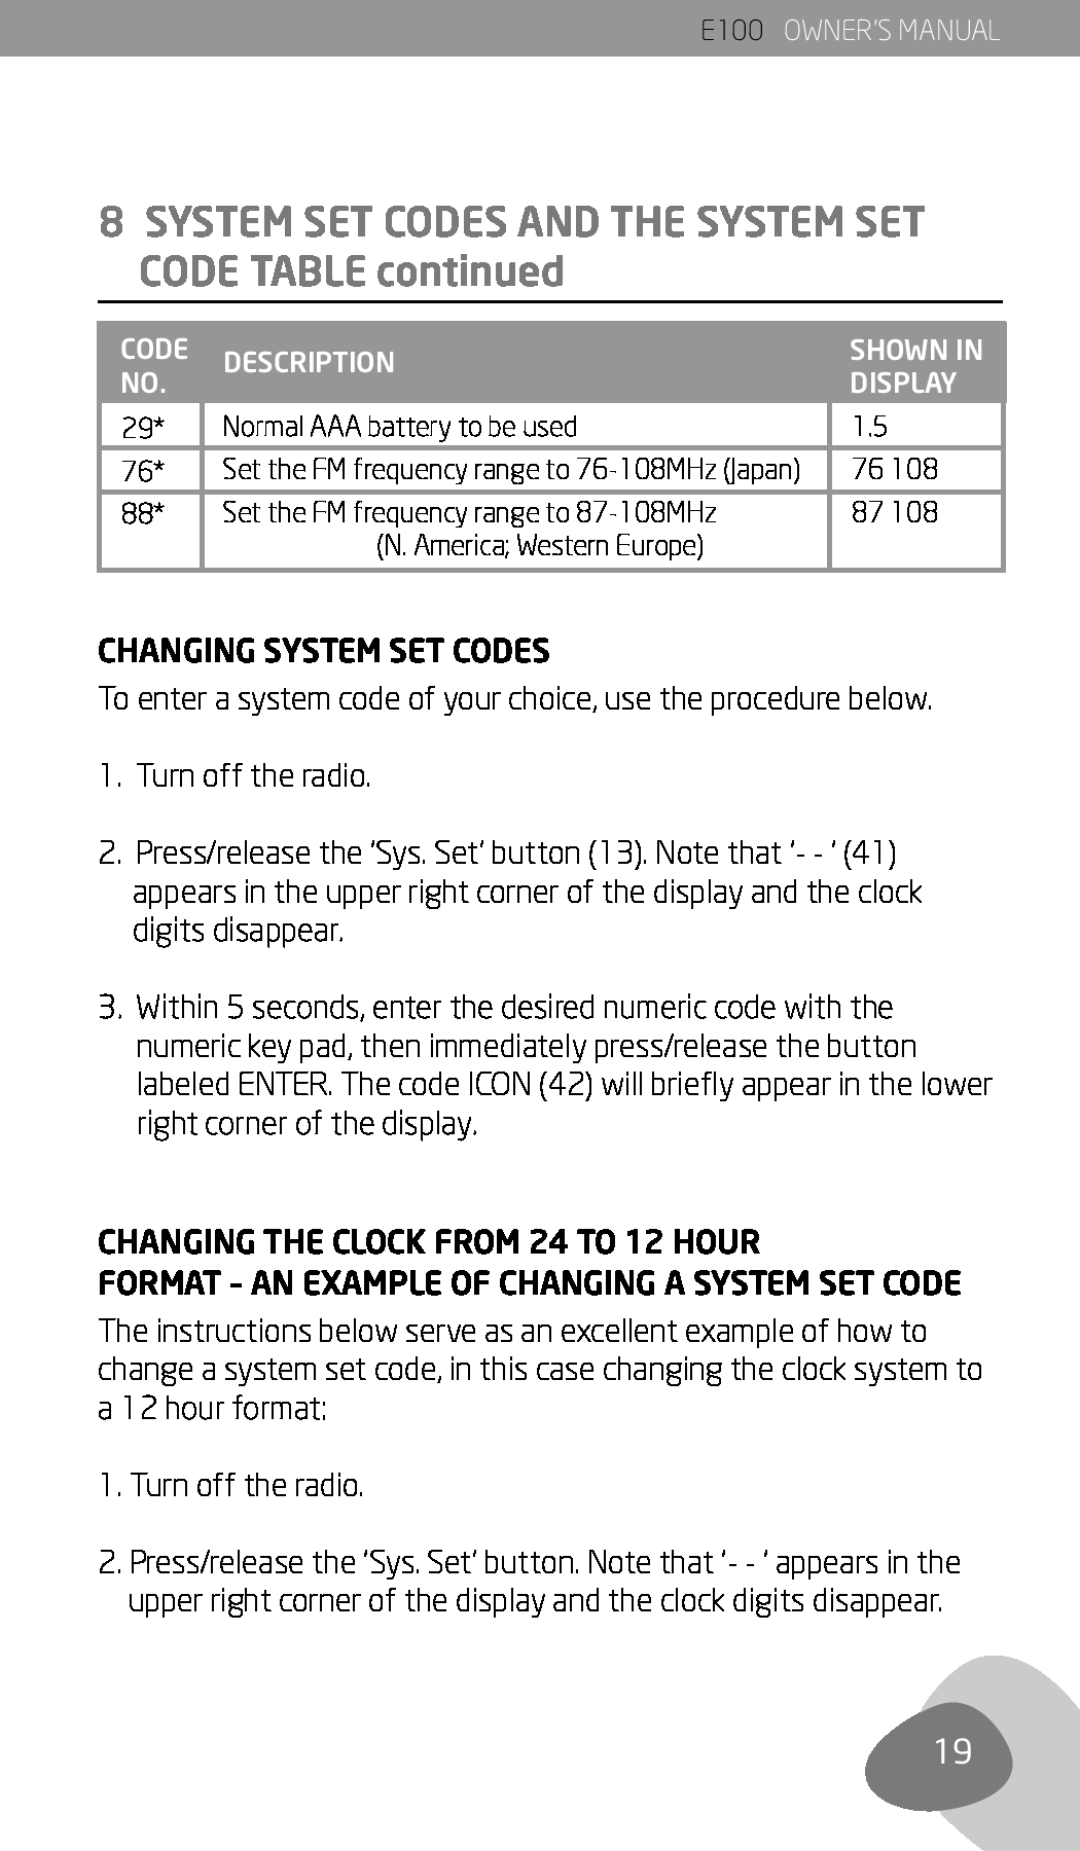 Eton E100 owner manual Changing System Set Codes 